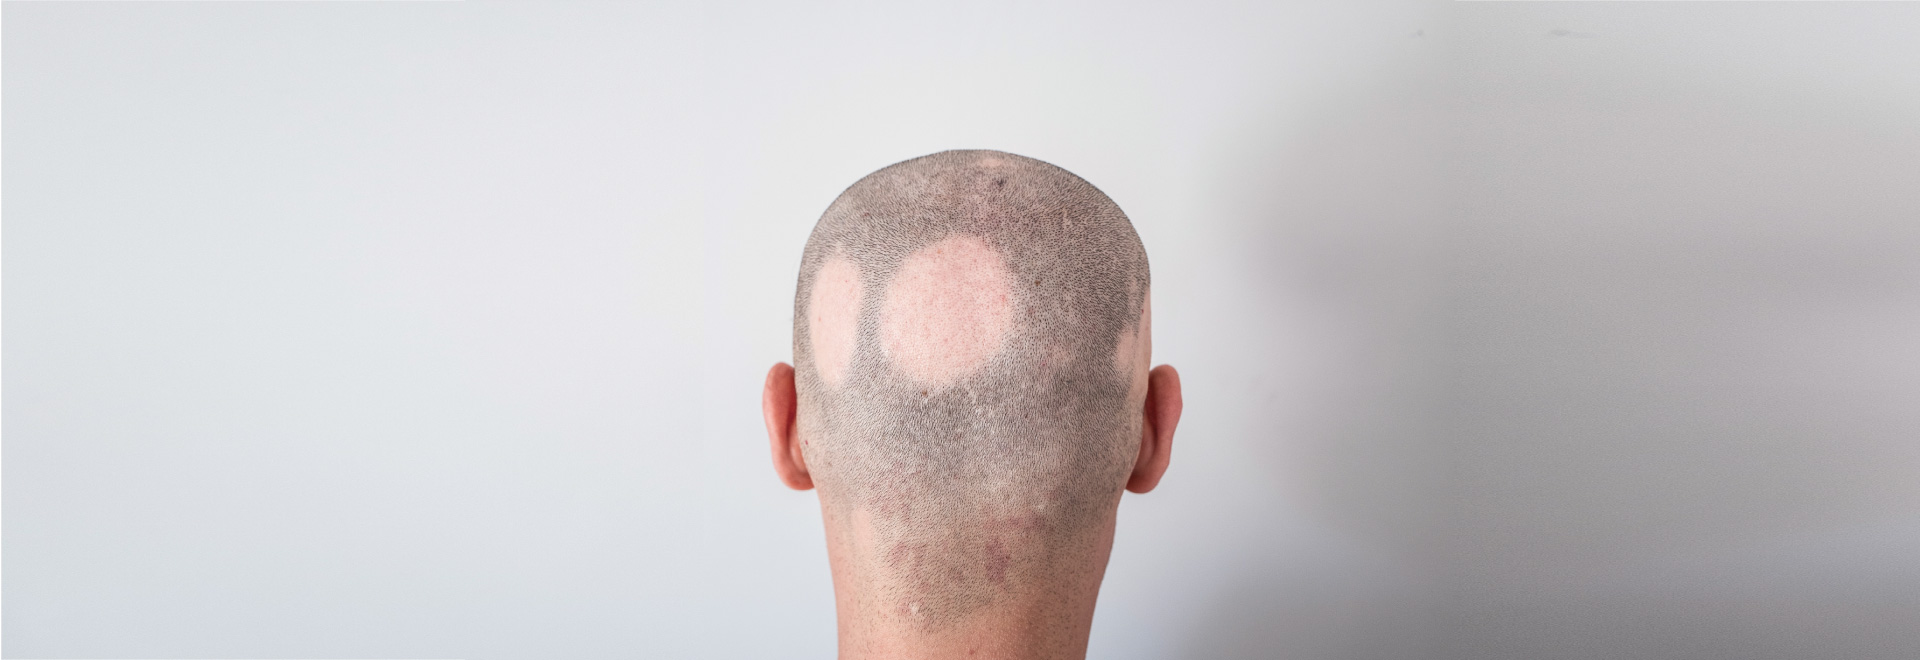 alopecia-causes-symptoms-treatment-prevention